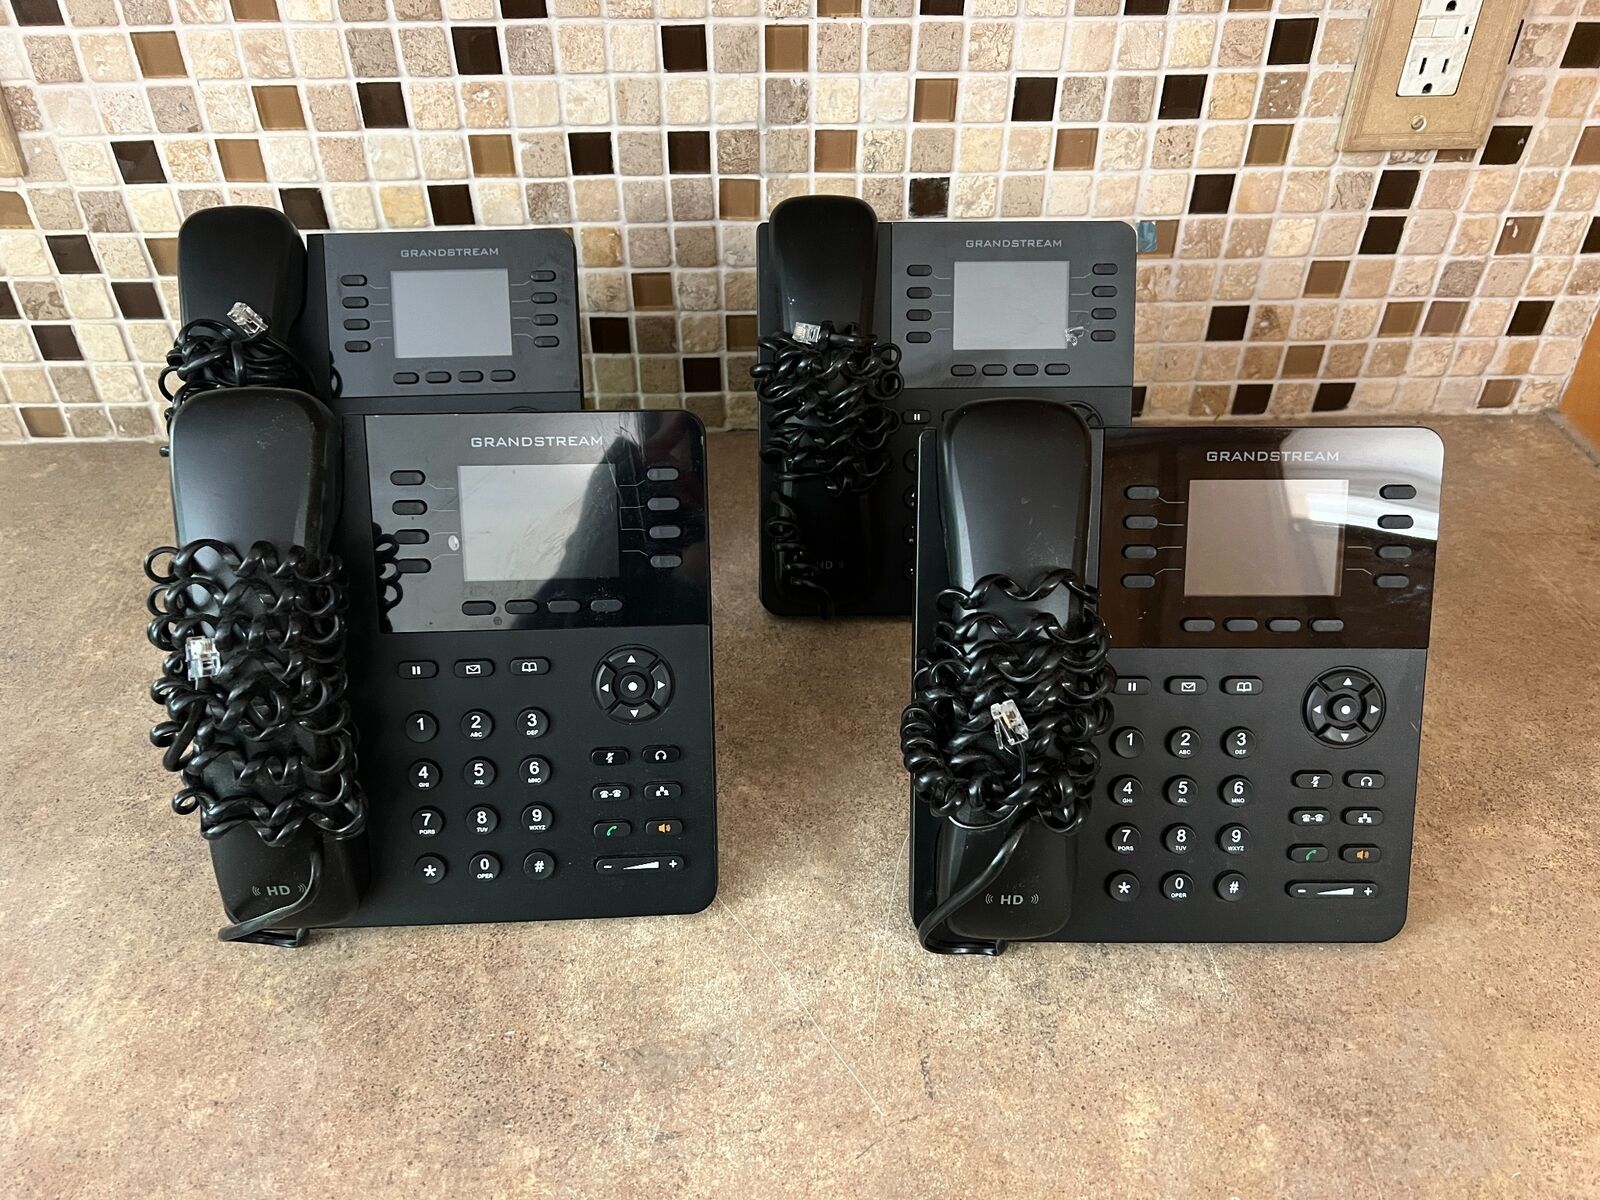 LOT OF 4 Grandstream GXP2135 8 Lines Bluetooth Enterprise VoIP Phone URSB-17w